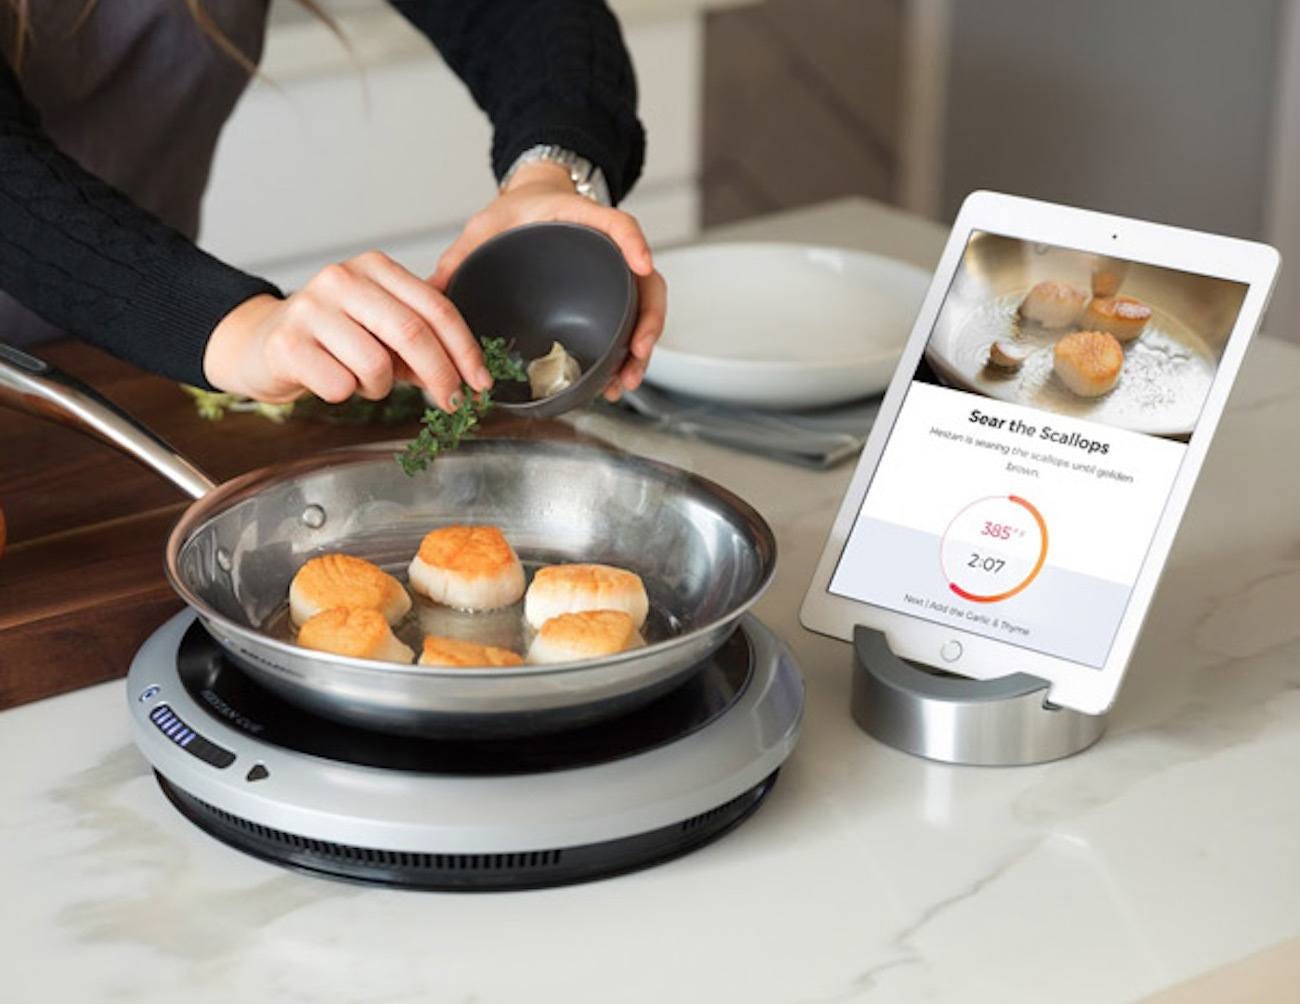 These kitchen gadgets shorten your breakfast prep time » Gadget Flow